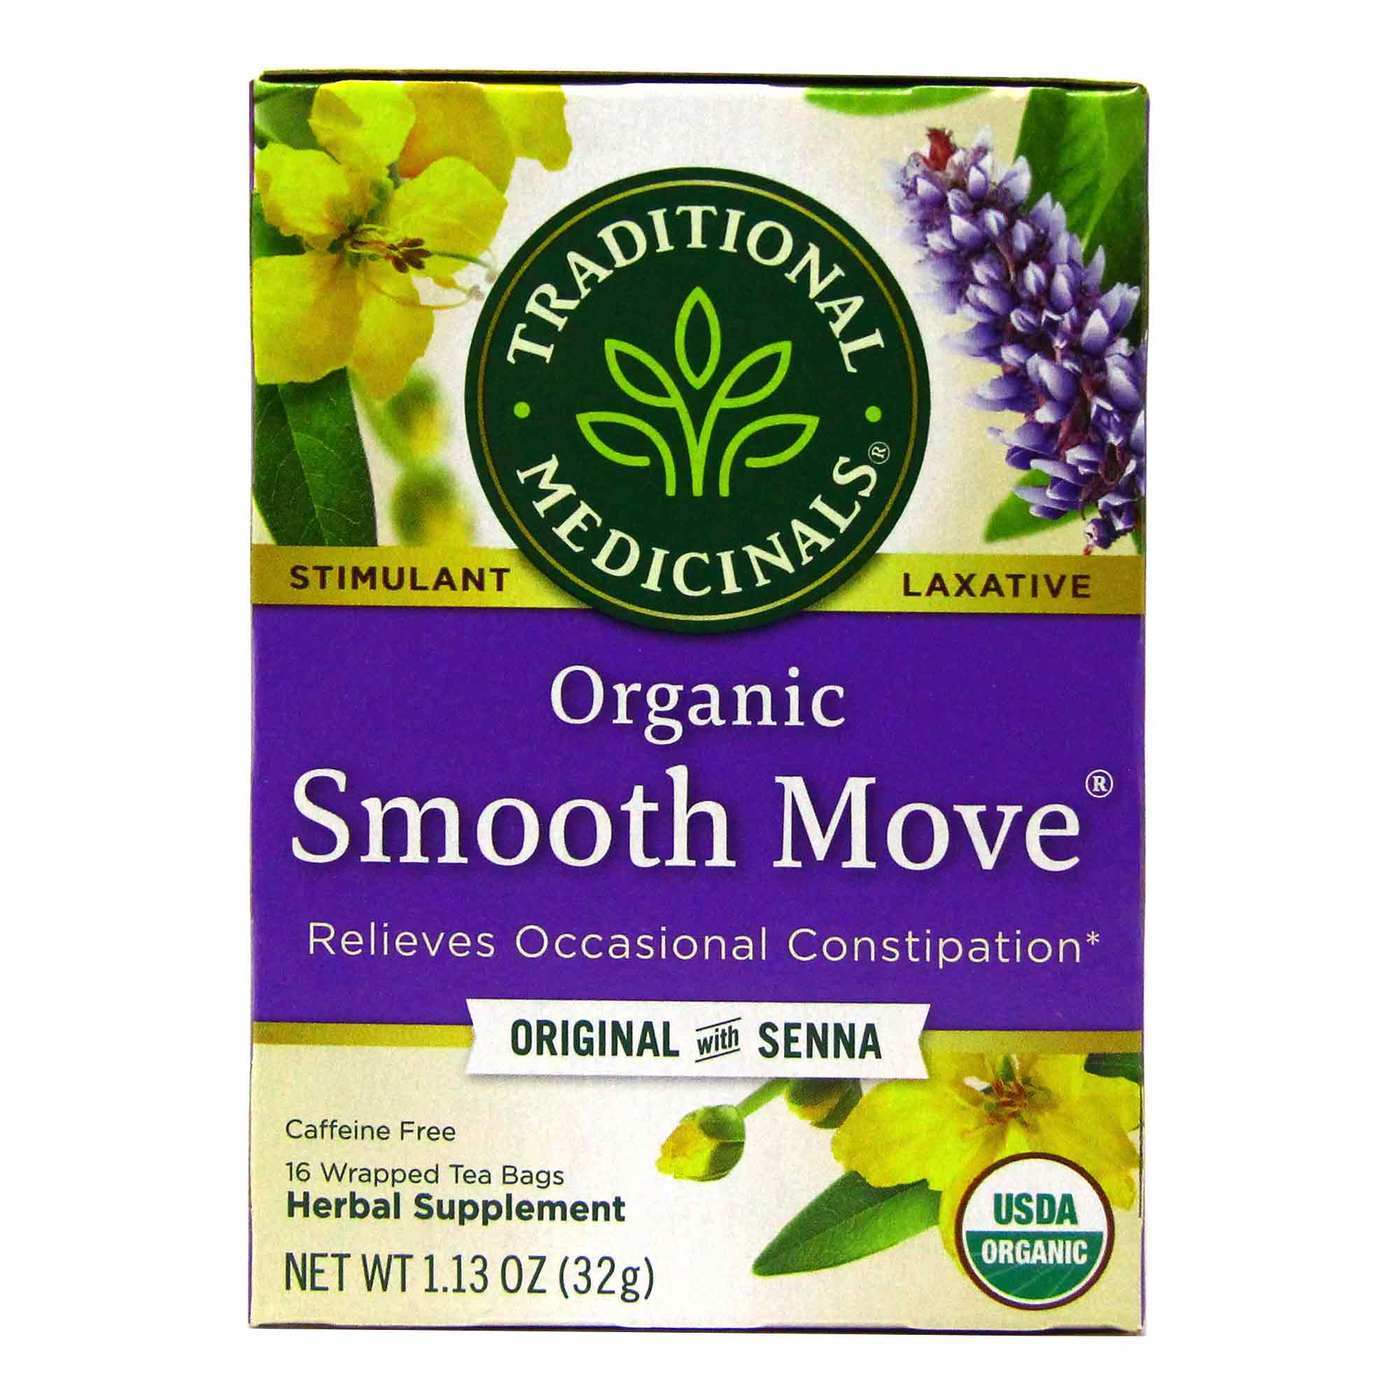 [Discon]Traditional Medicinals, Organic Smooth Move Original with Senna 16Ct